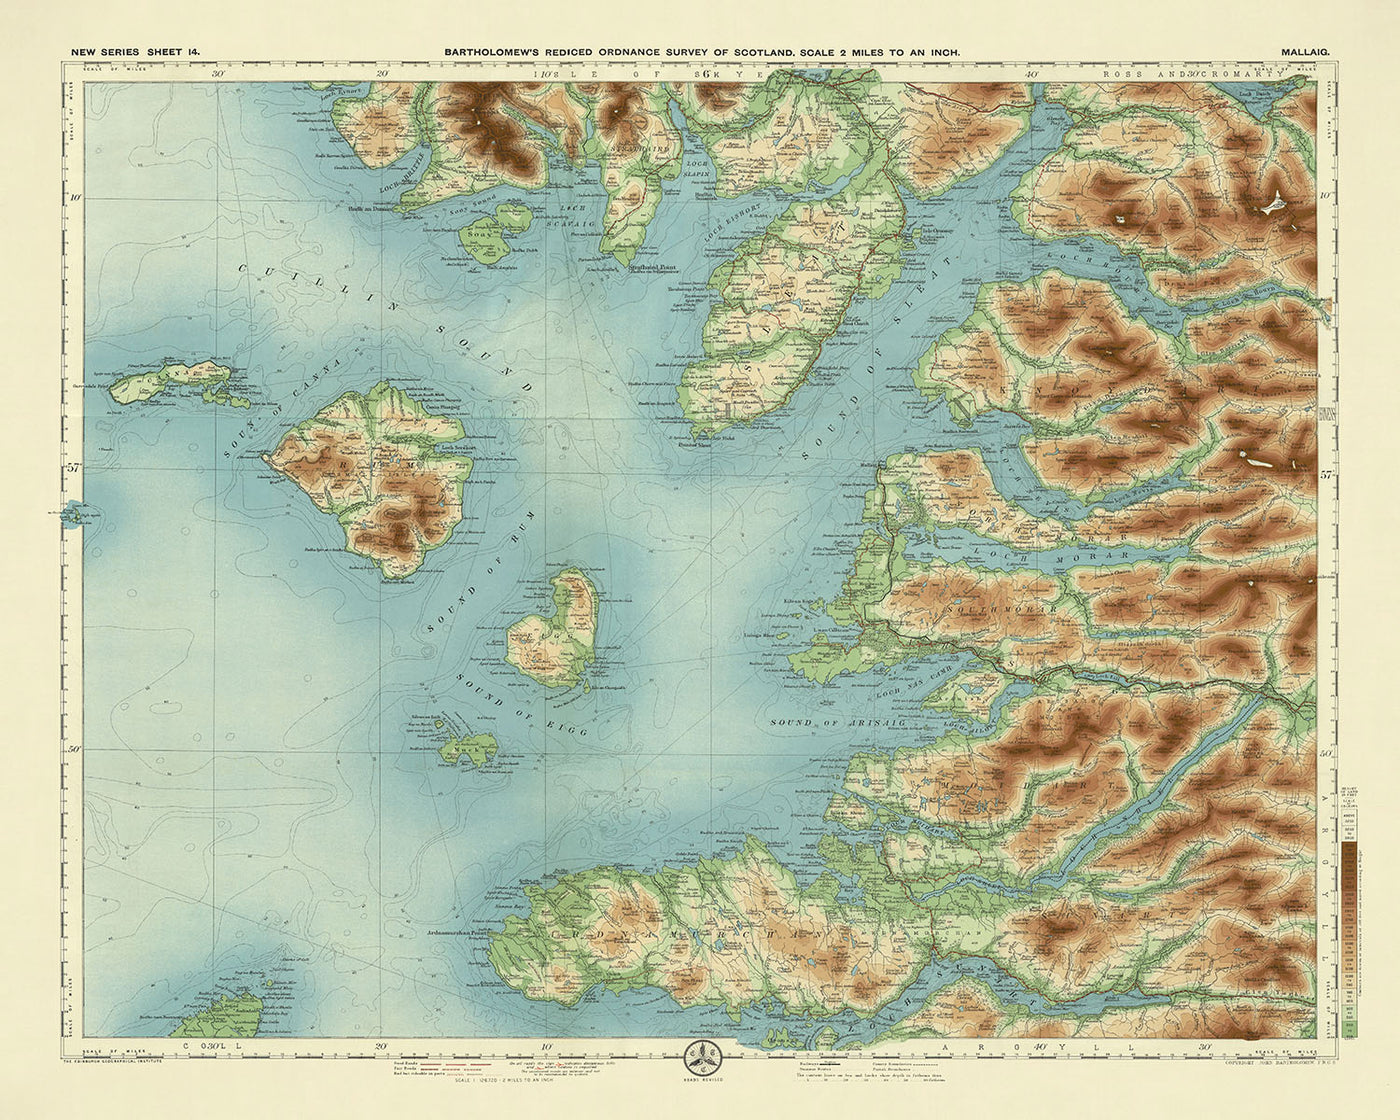 Old OS Map of Mallaig, Inverness-shire by Bartholomew, 1901: Isle of Skye, Loch Morar, Cuillin Hills, Glenfinnan, Sound of Sleat, Knoydart